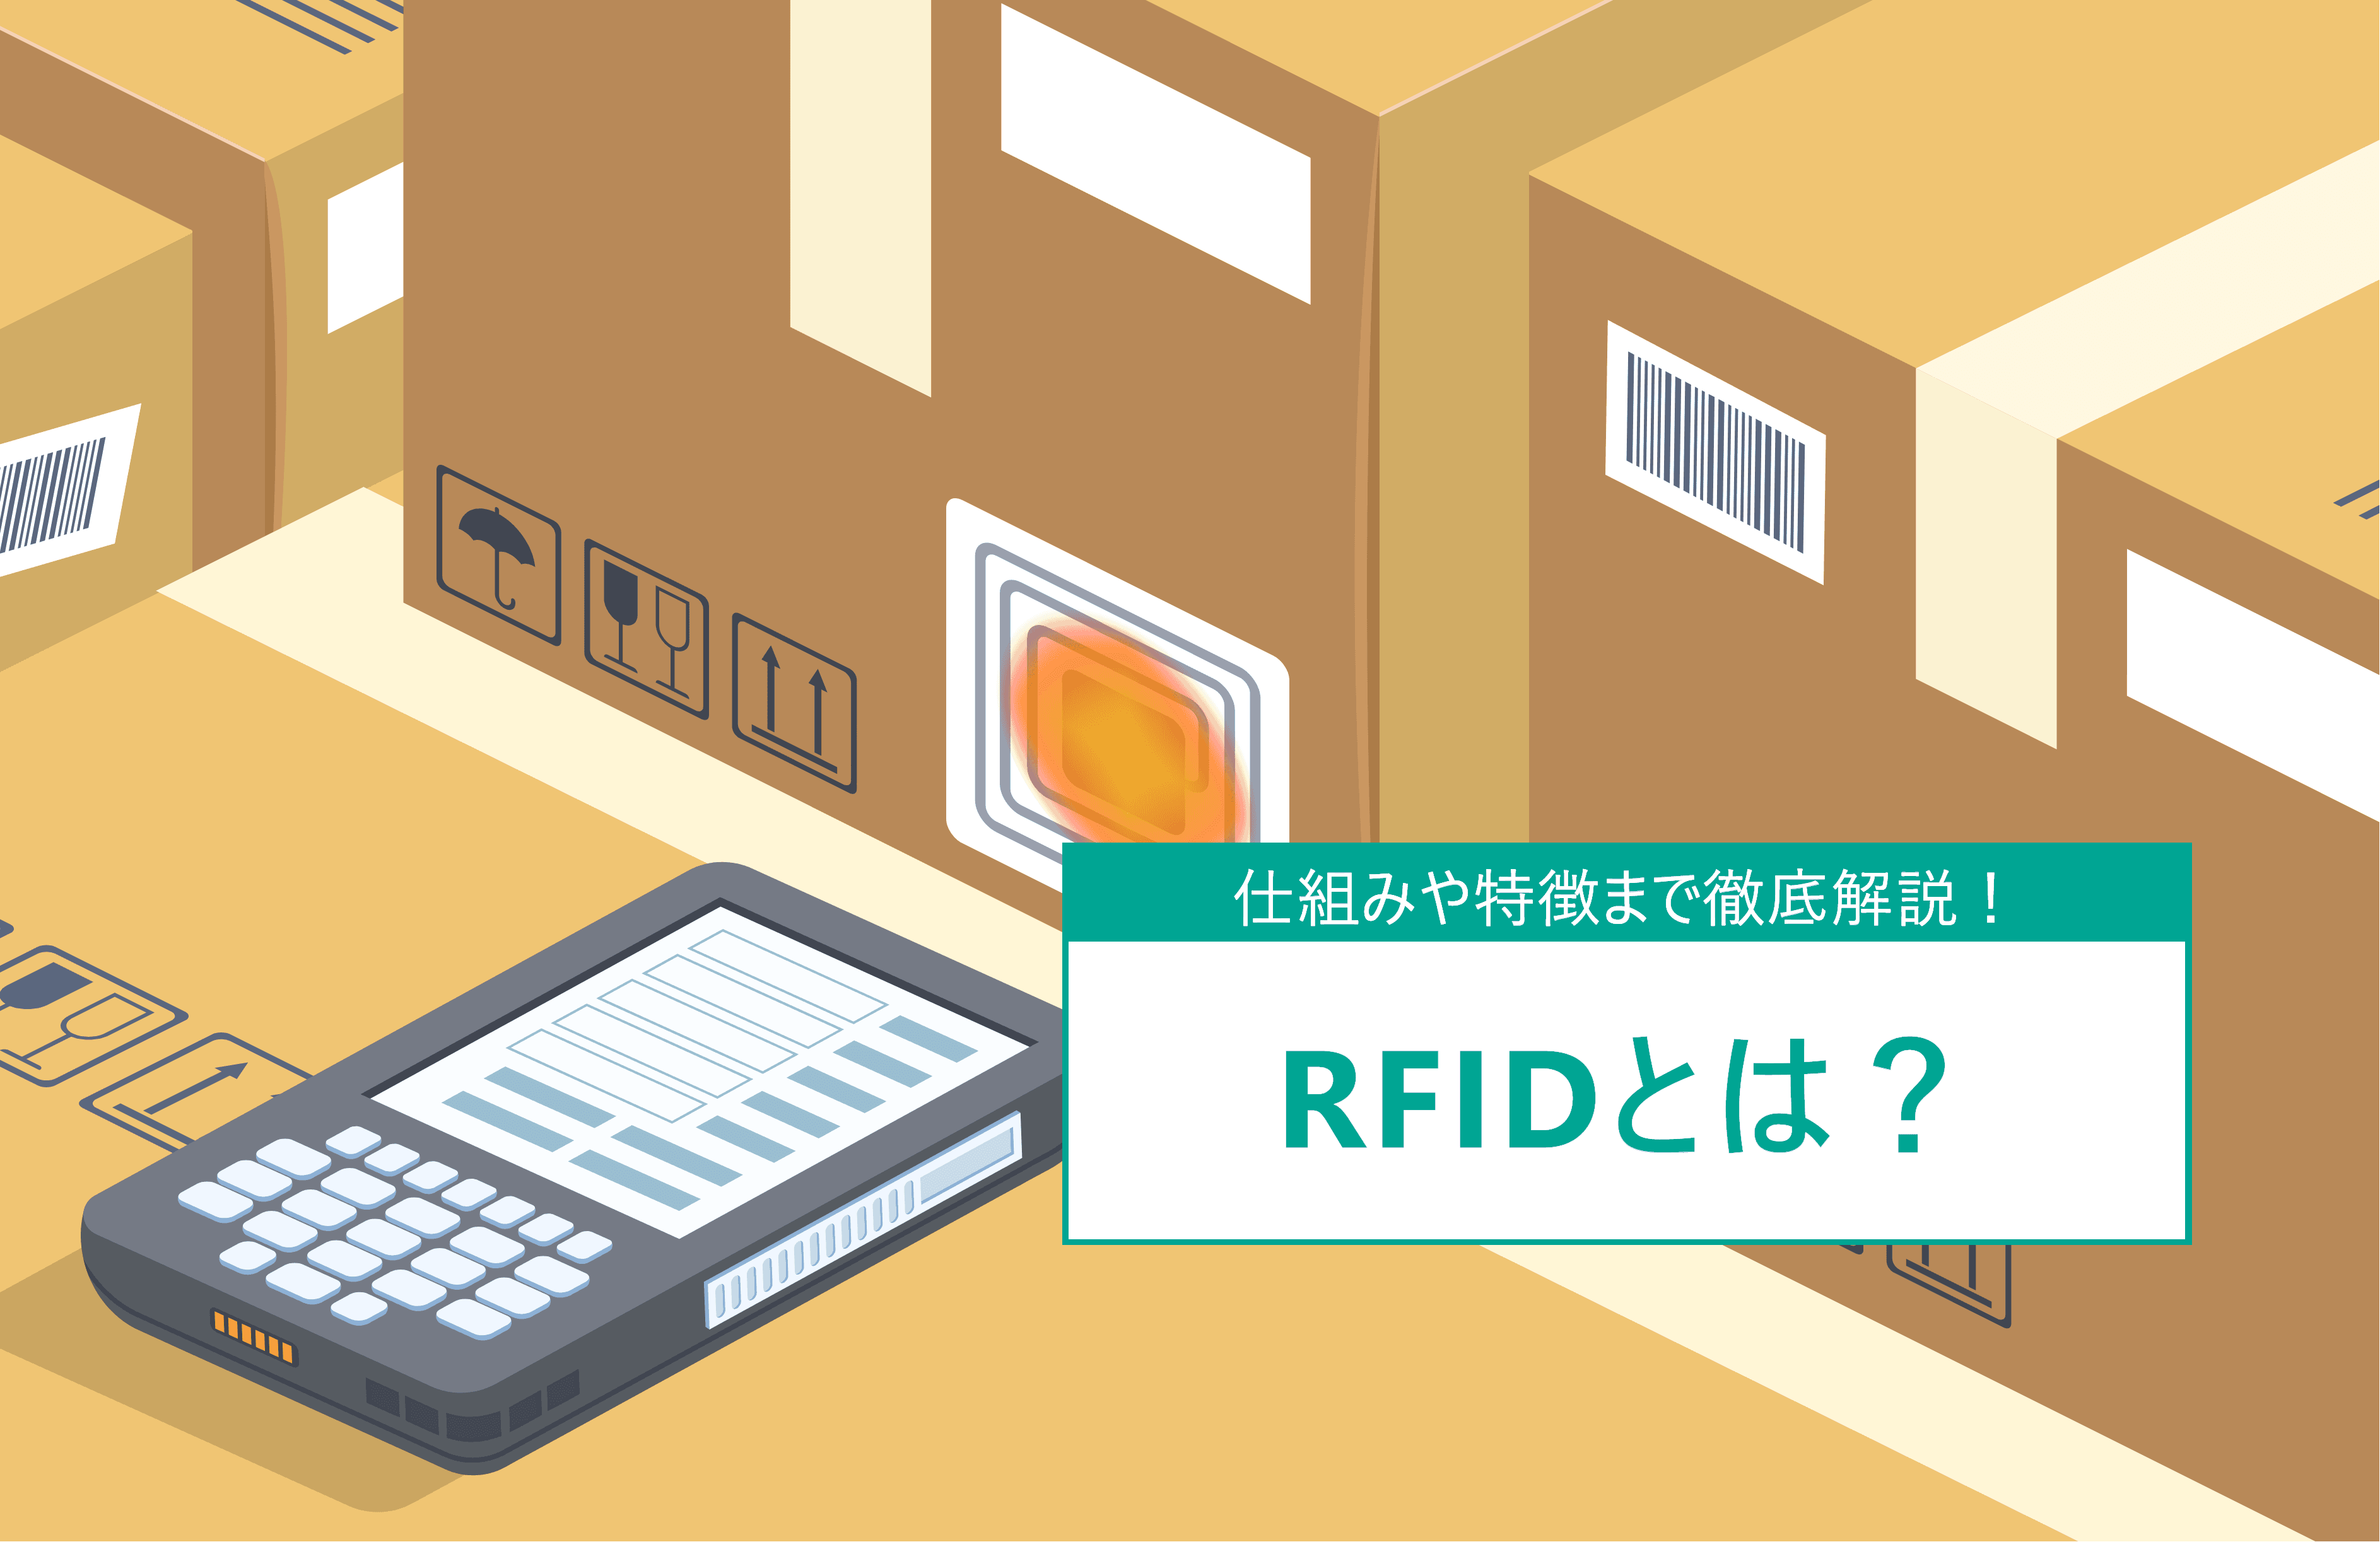 RFIDとは？仕組みや特徴について解説！在庫管理等の活用例も